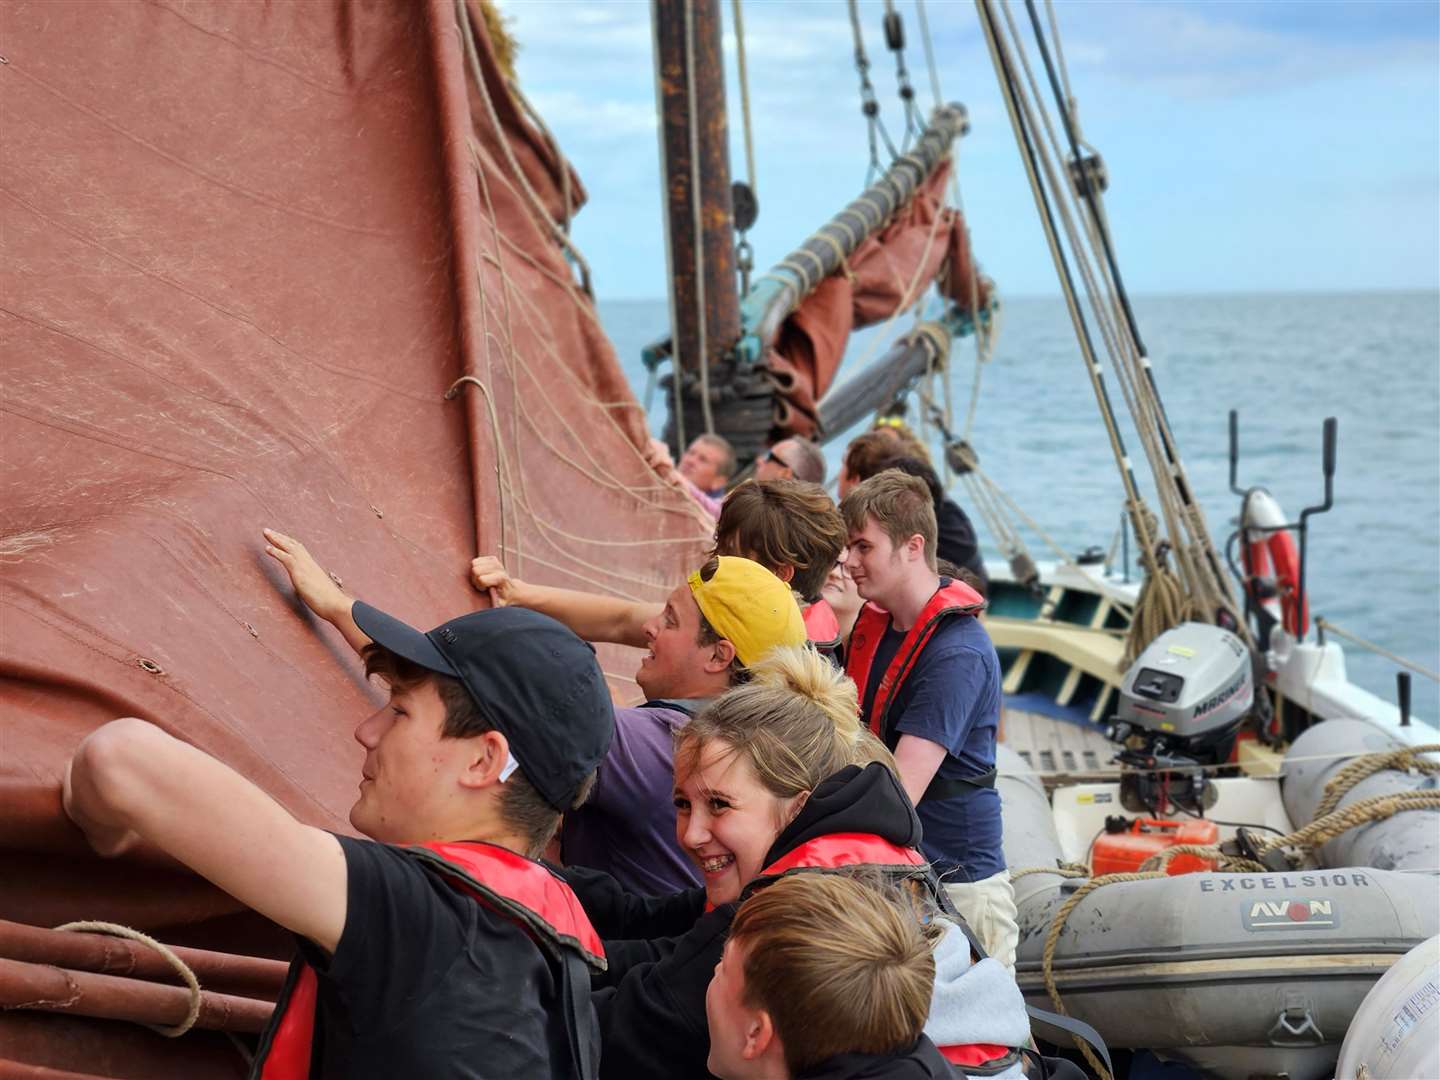 The students sailed on the vessel Excelsior. Credit: Barking Dog Media.